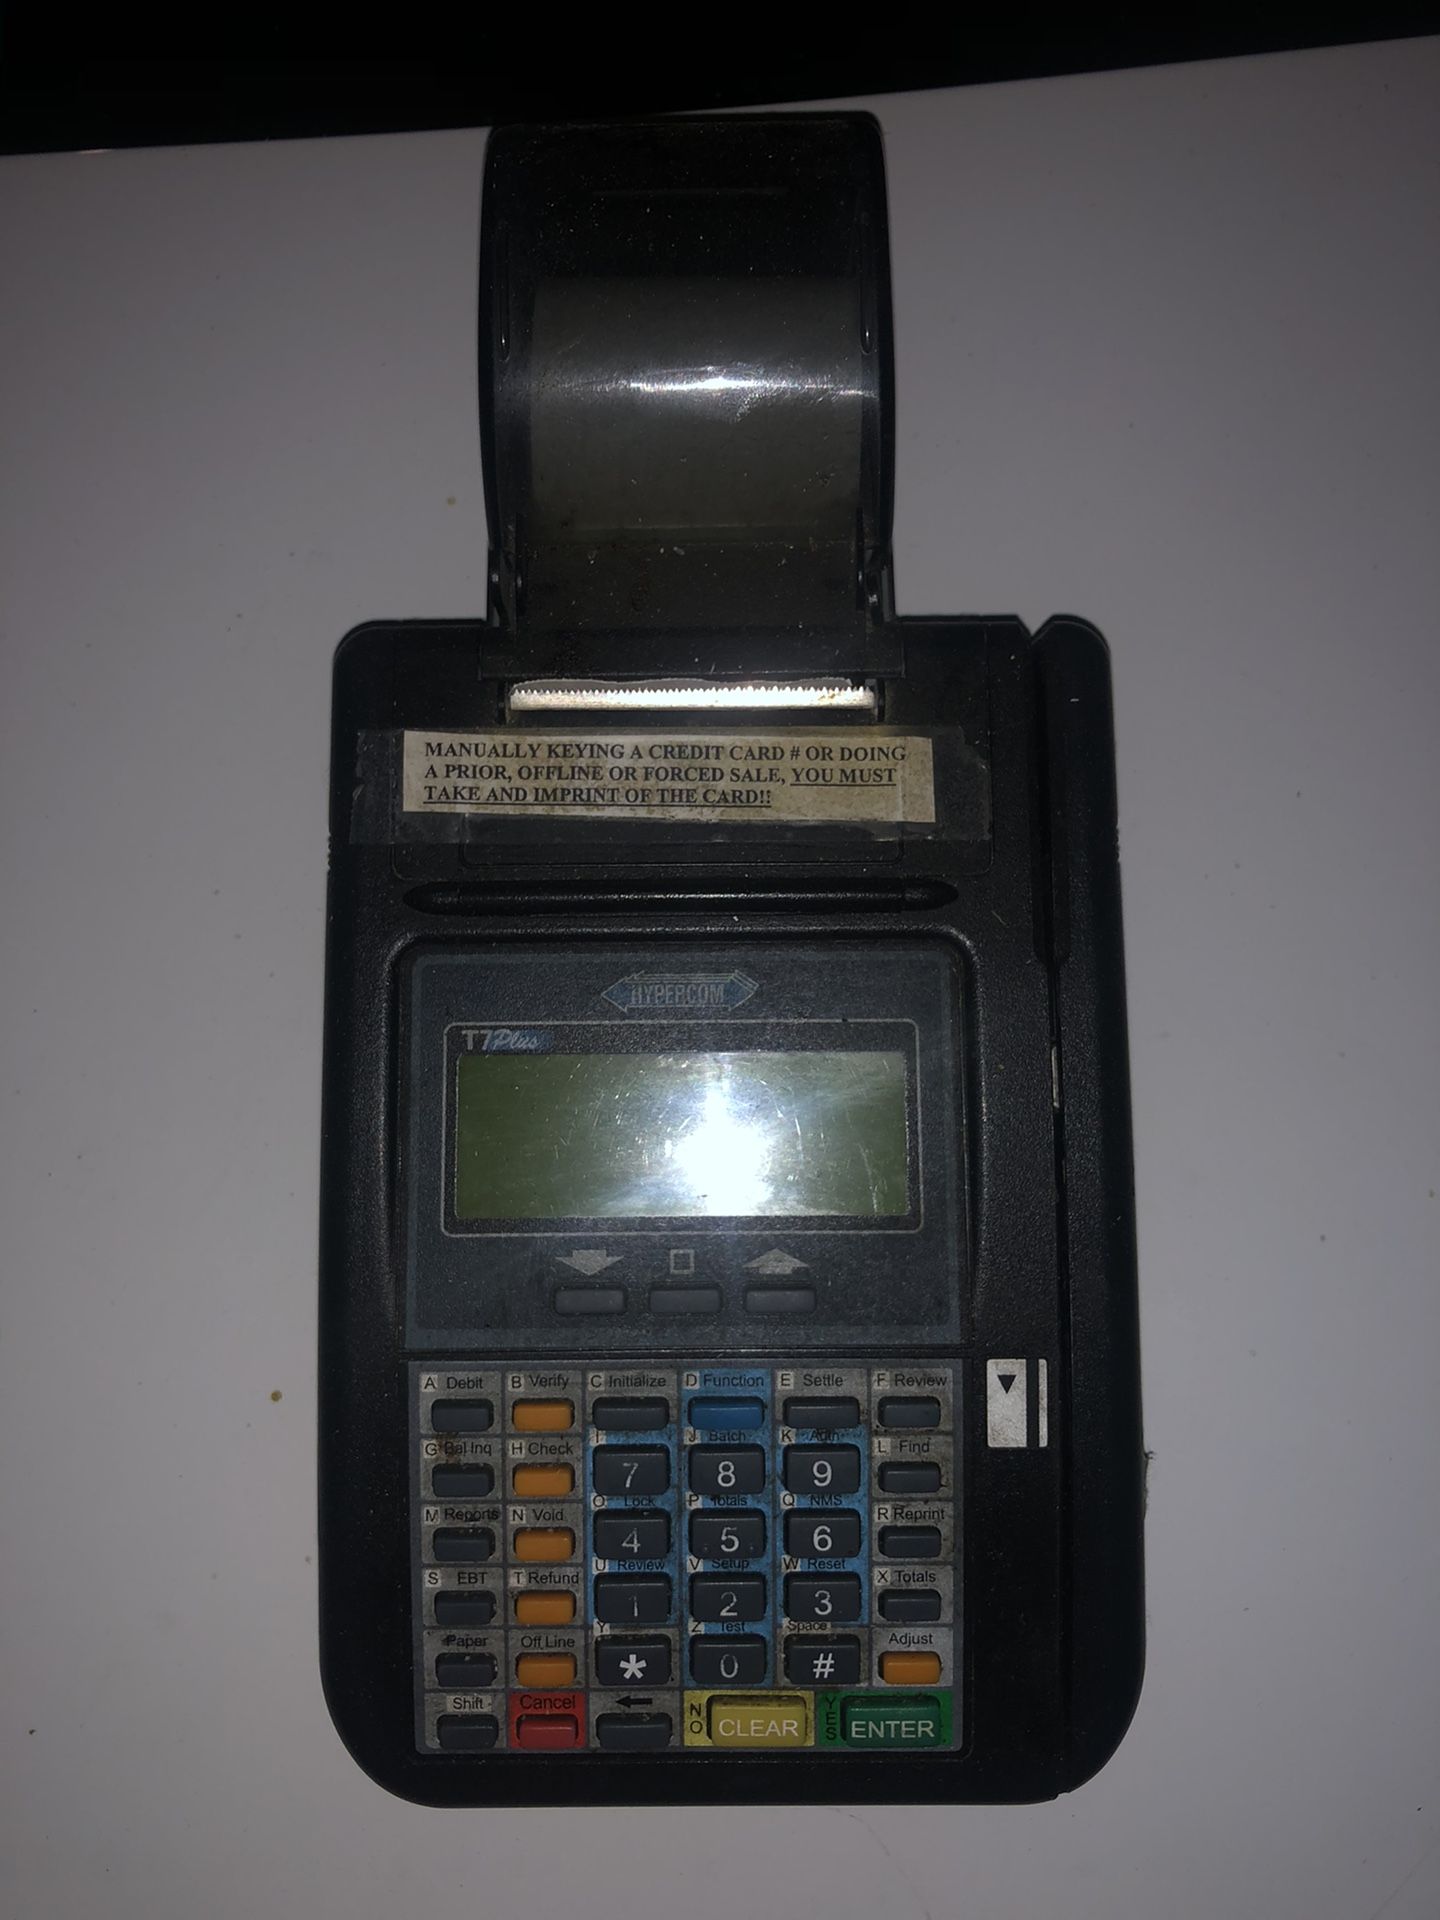 Hypercom T7plus, credit card terminal